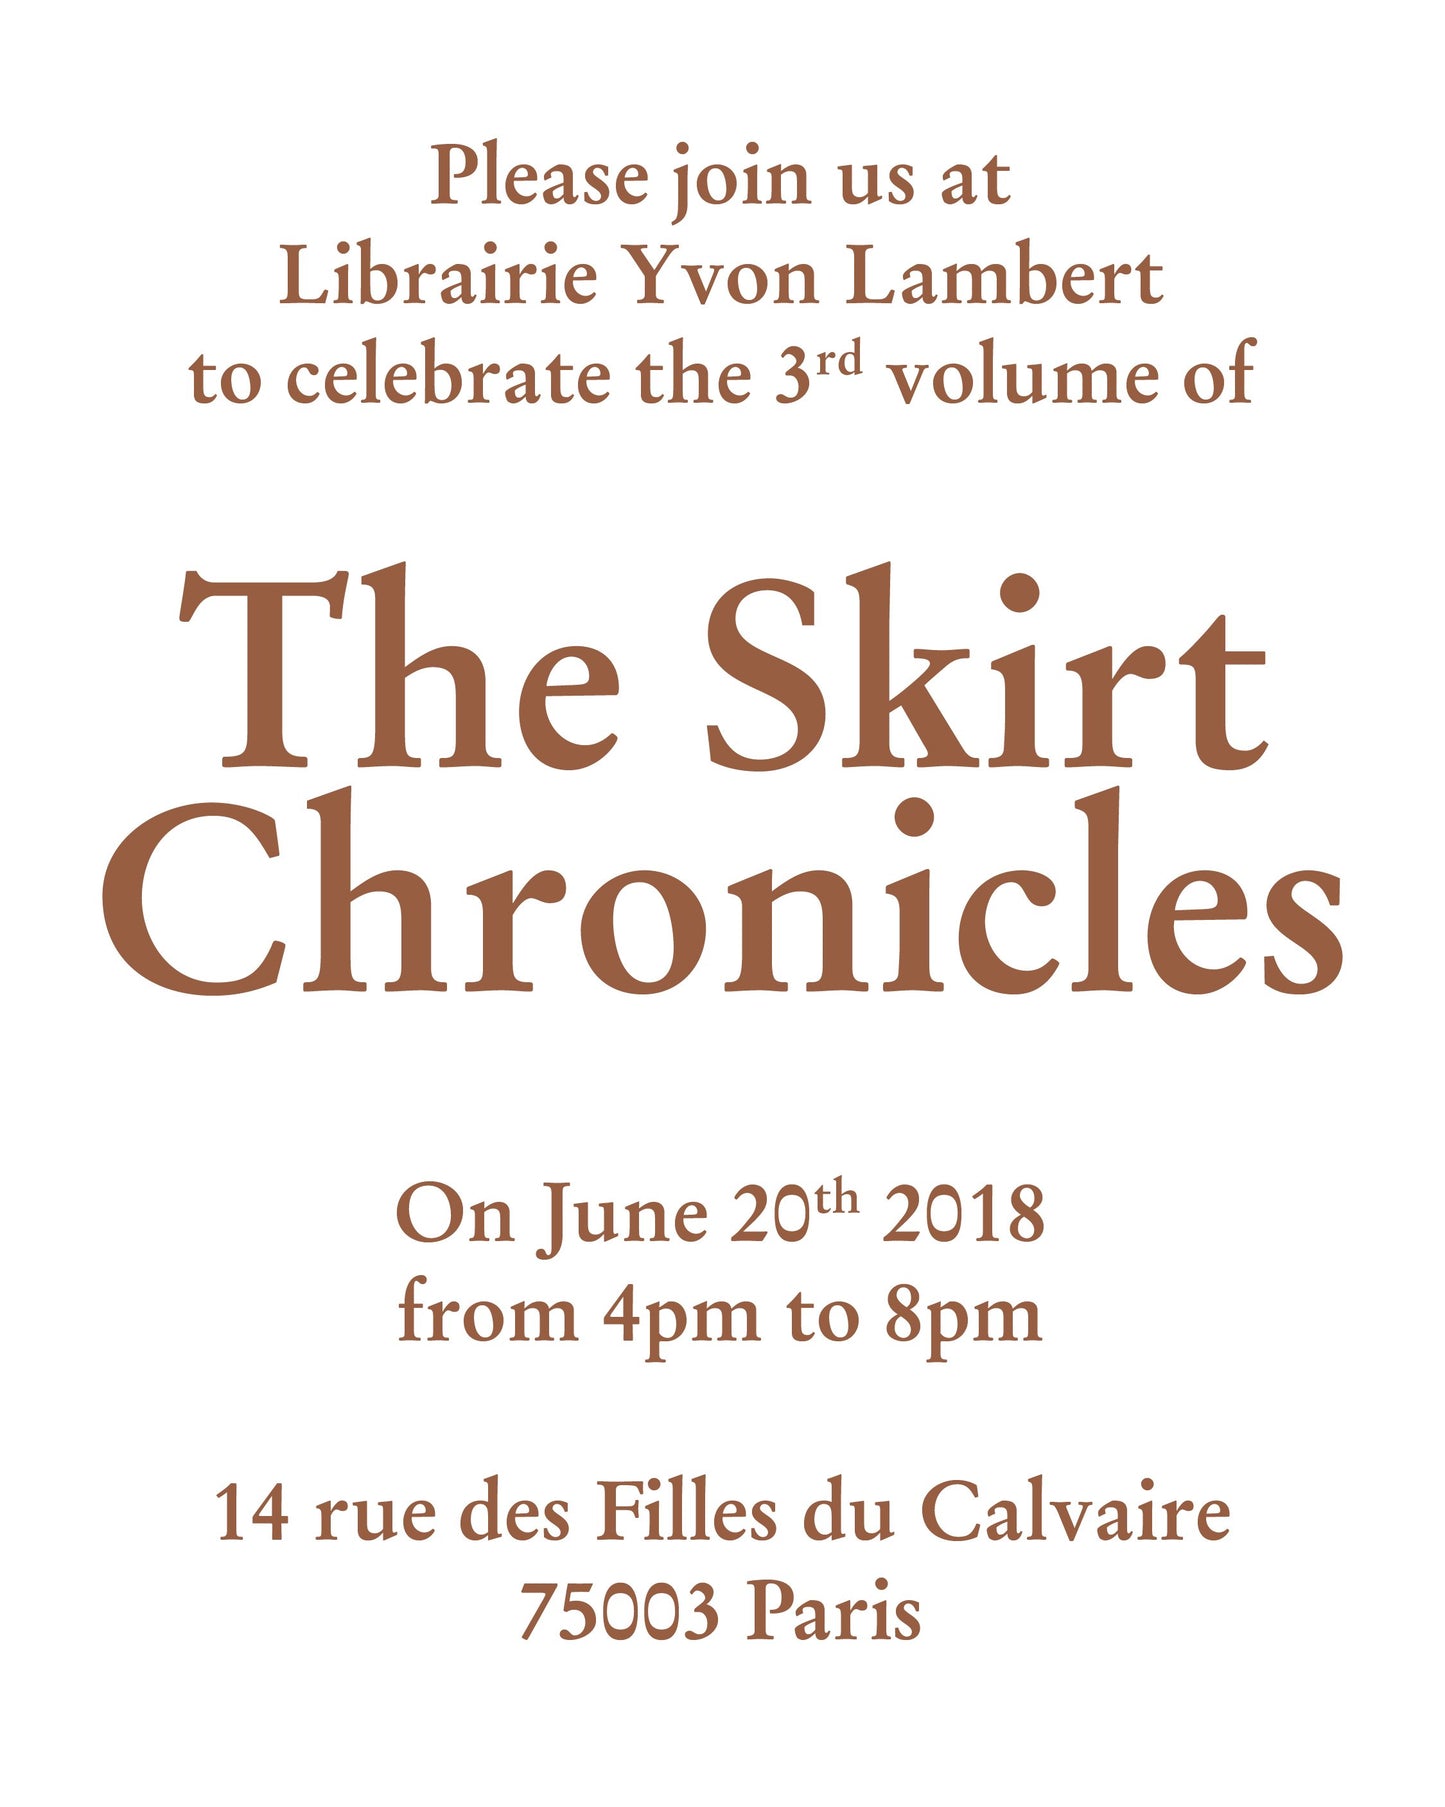 The Skirt Chronicles Volume III